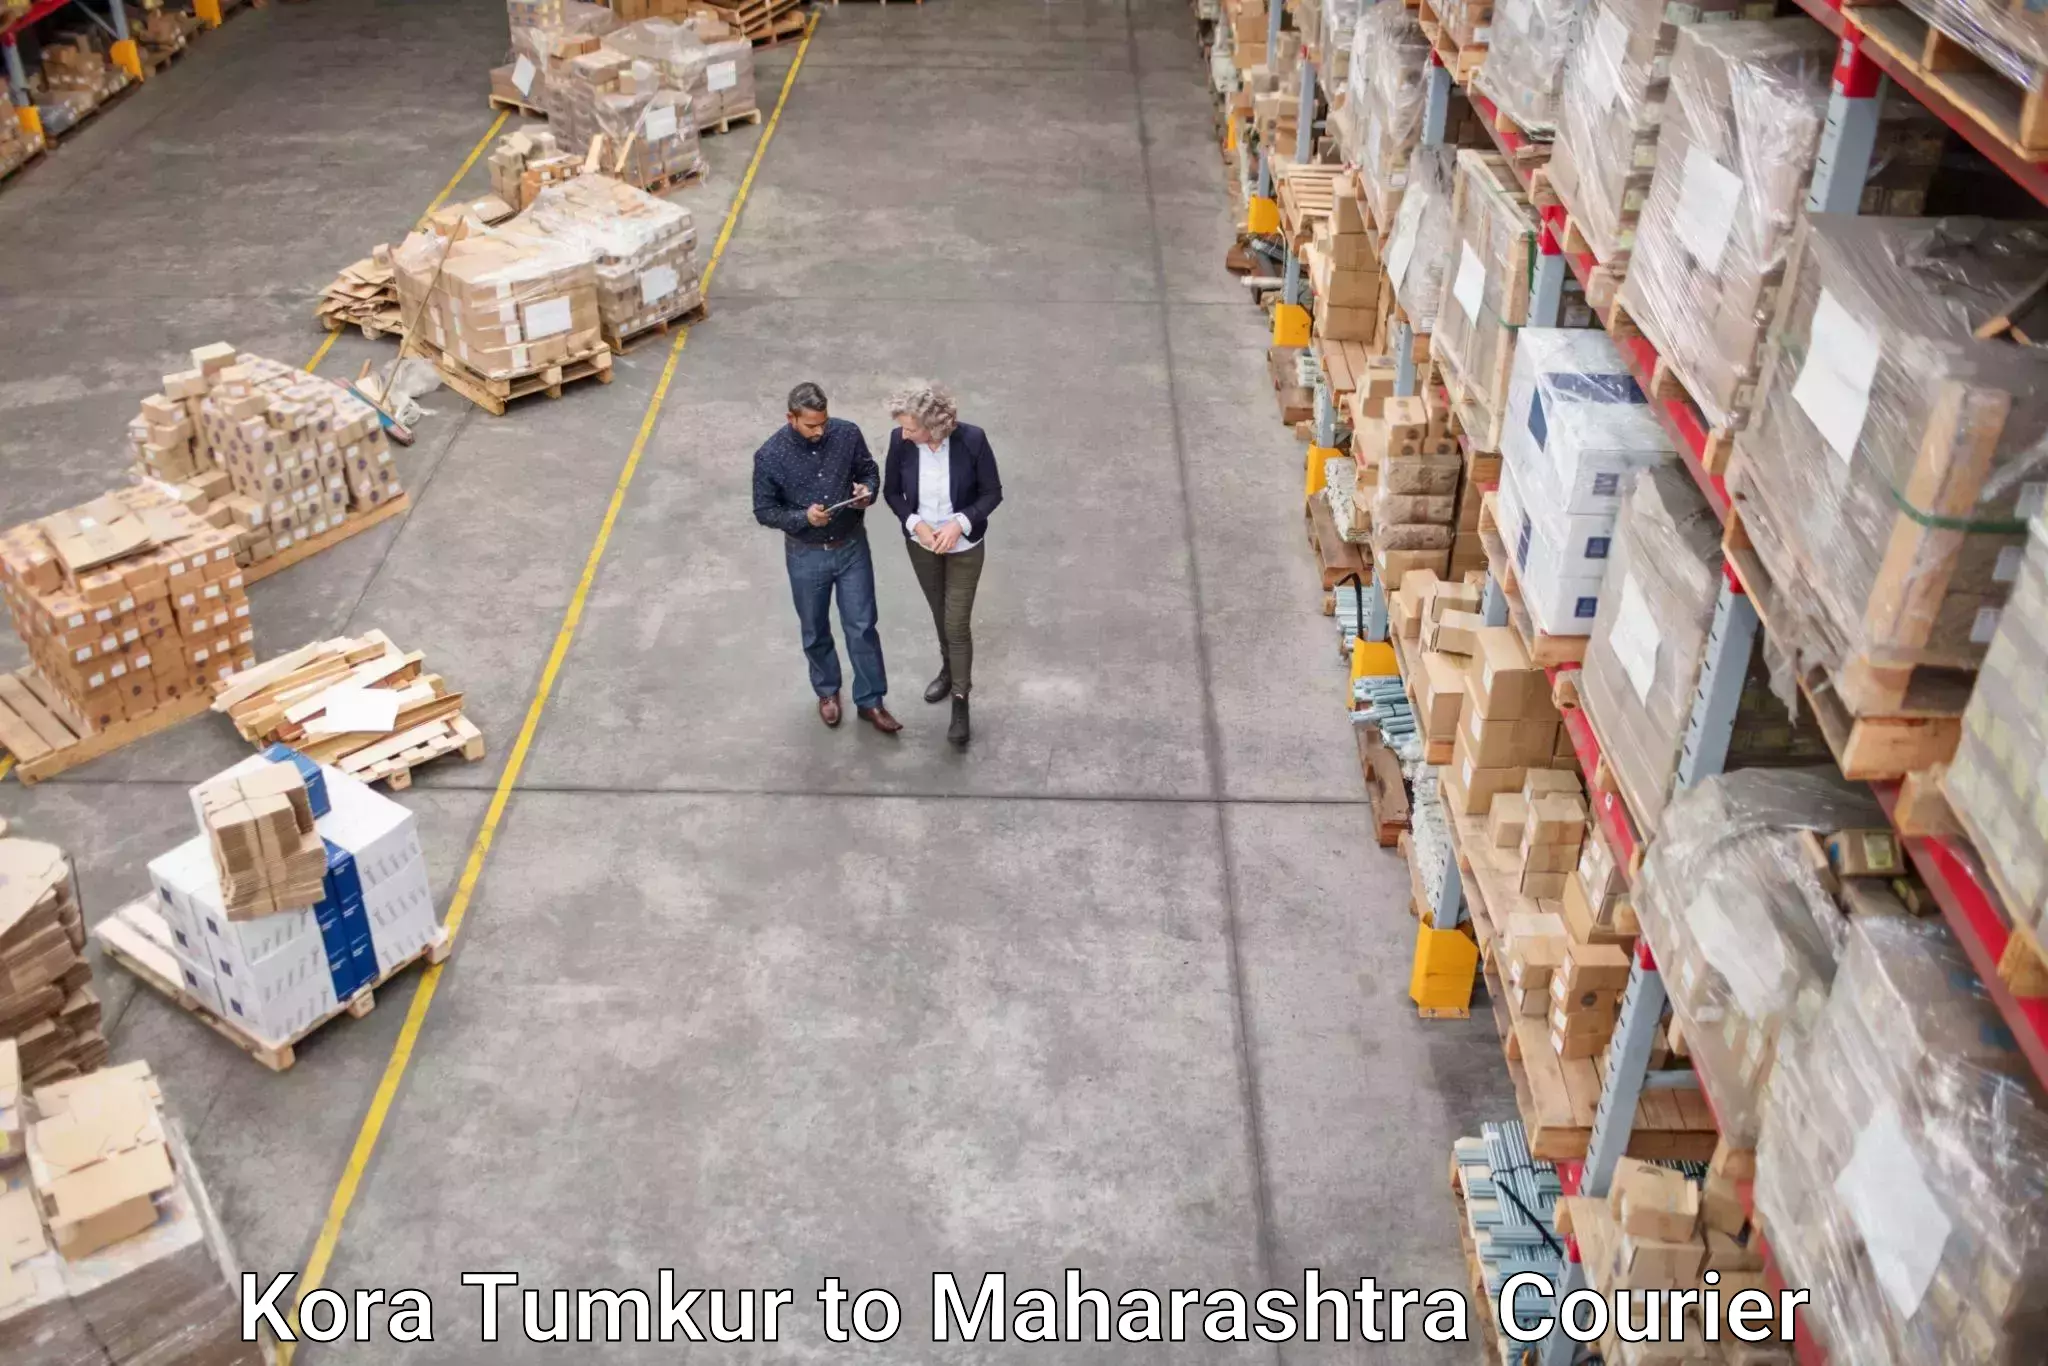 Business shipping needs Kora Tumkur to Mumbai Port